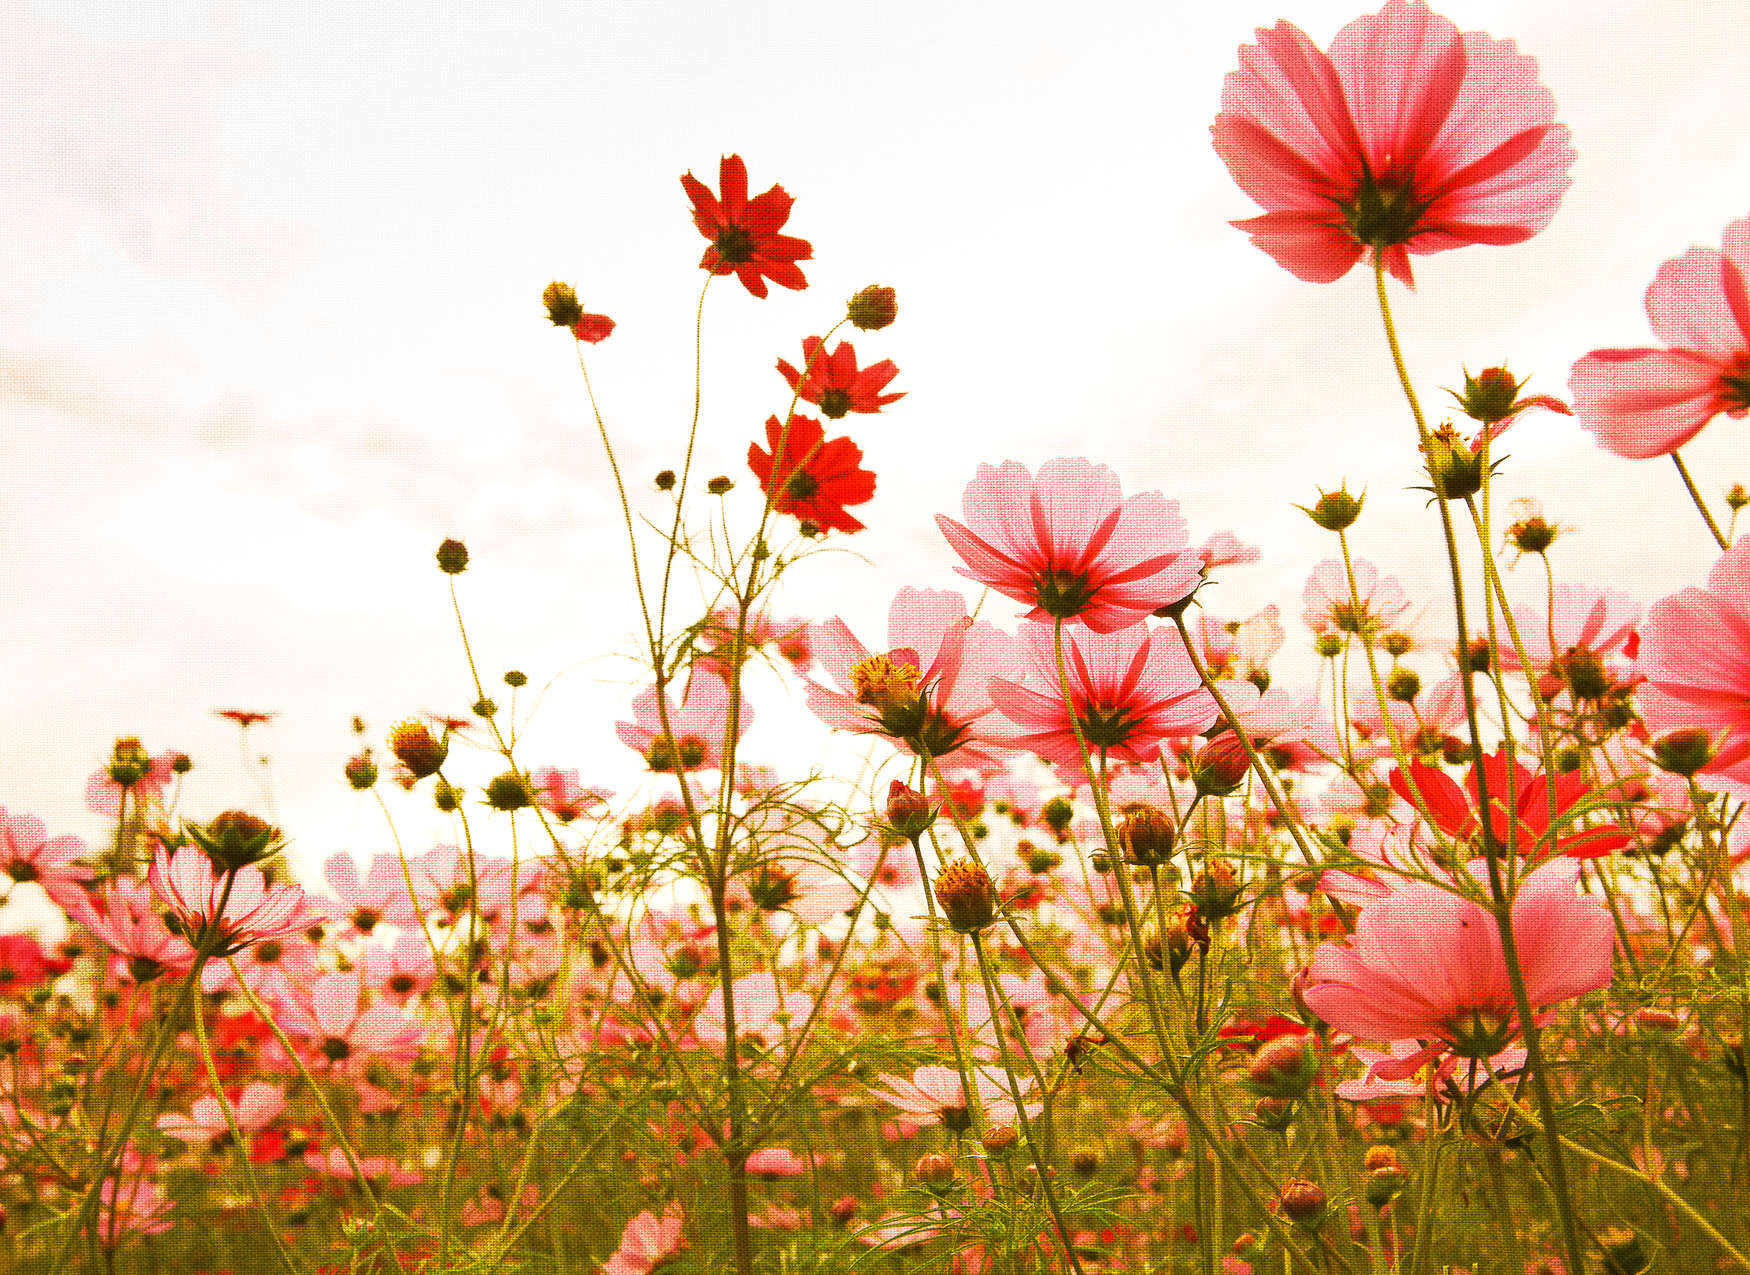             Bloemenweide in de lente - roze, groen, wit
        